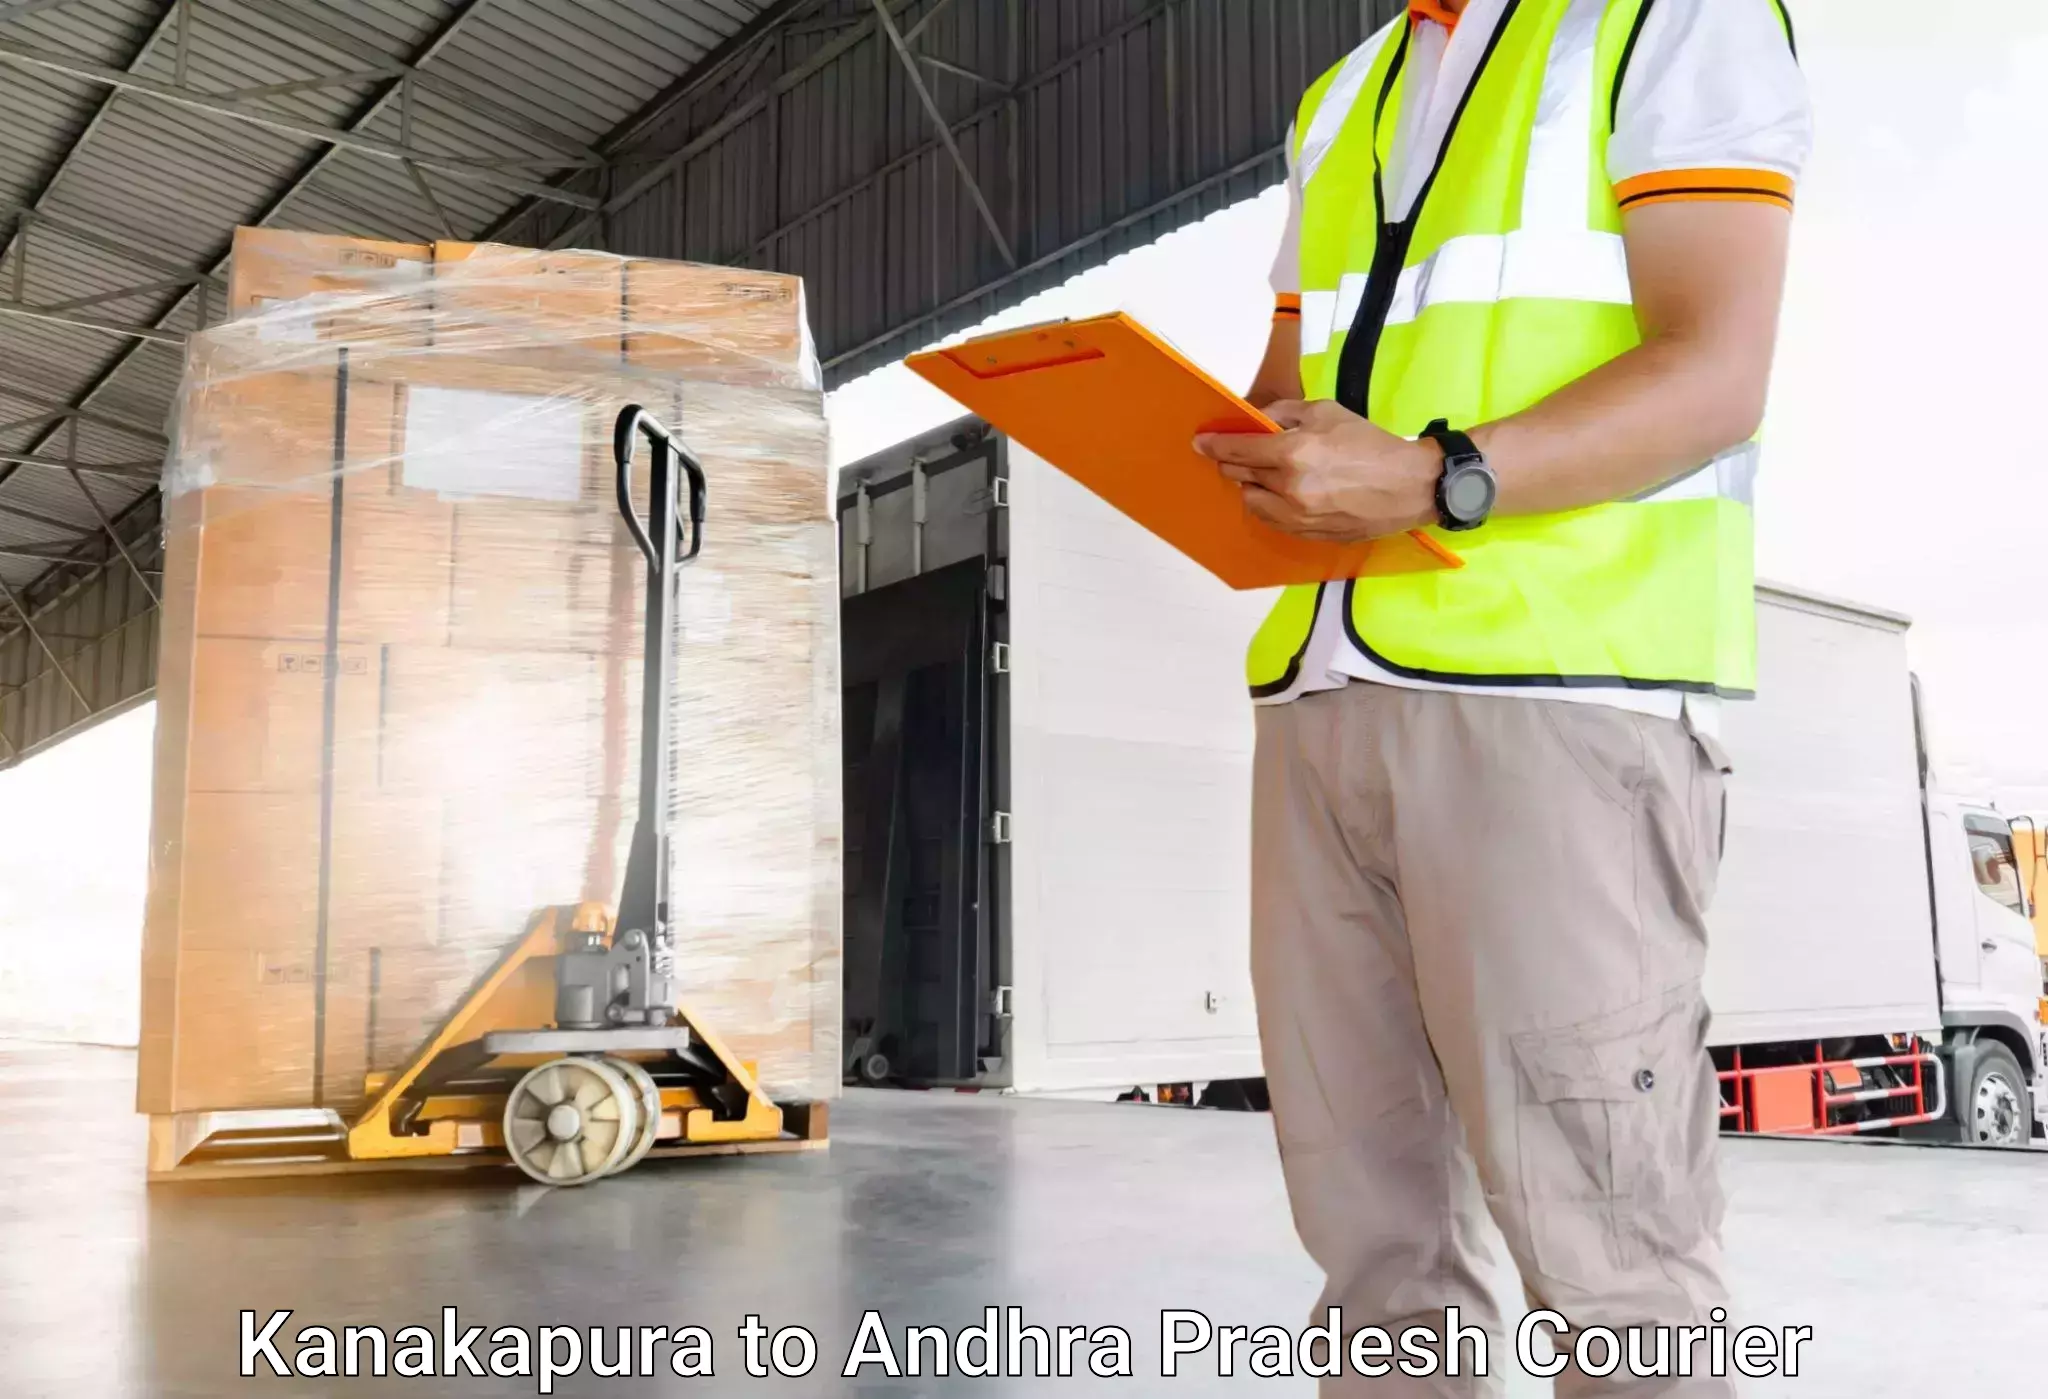 Luggage delivery system in Kanakapura to Visakhapatnam Port